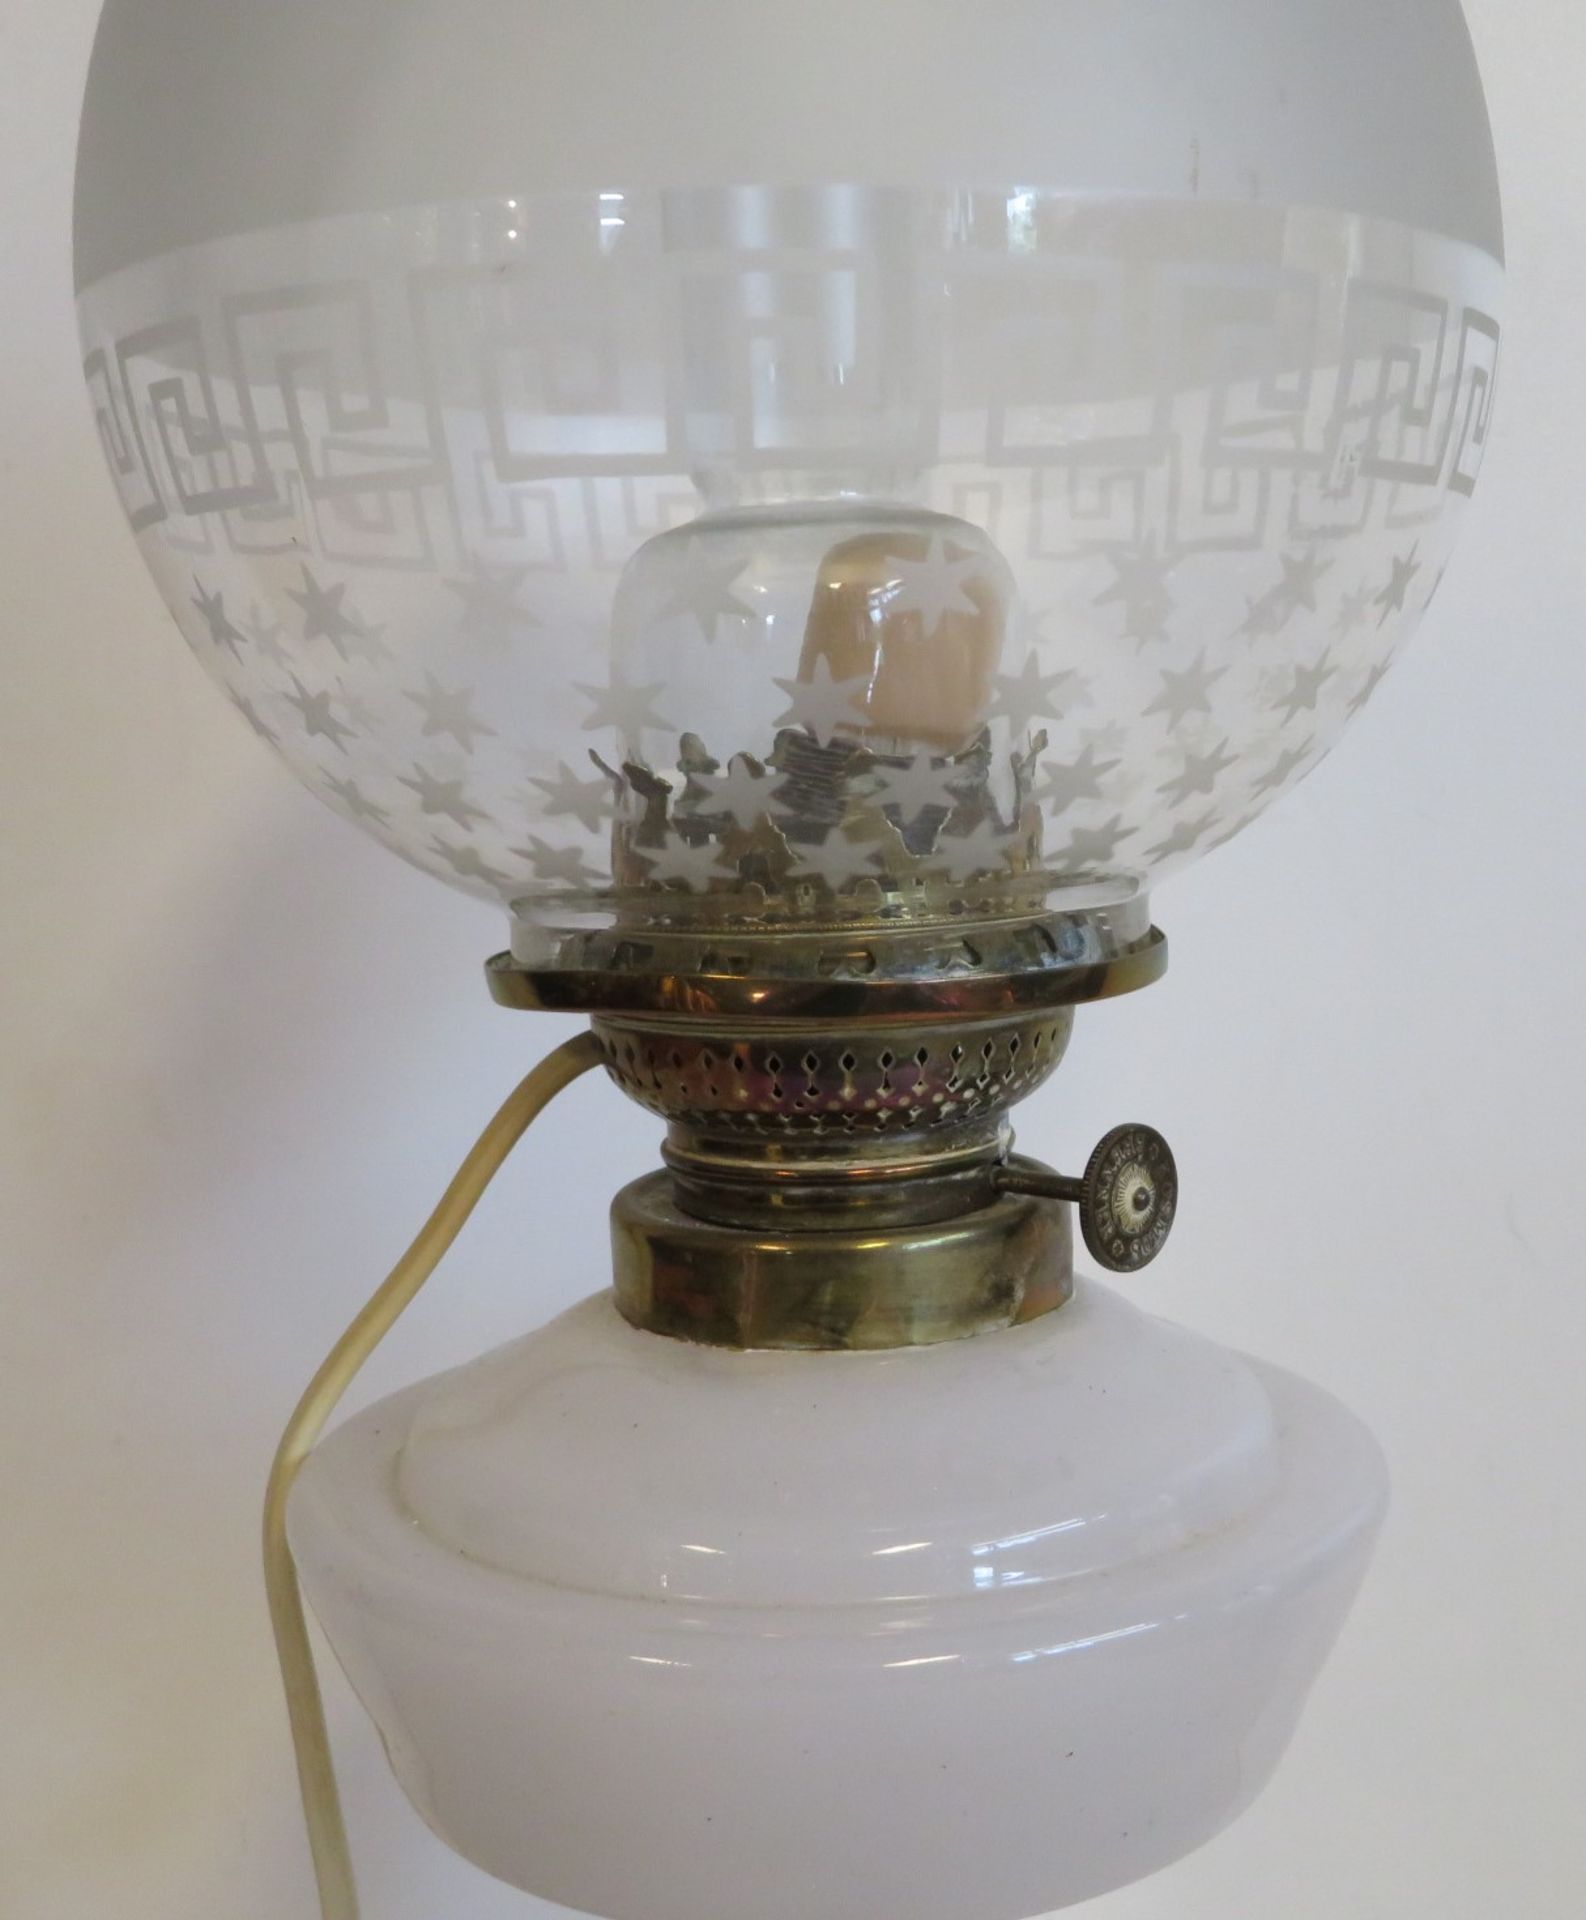 Petroleum-Tischlampe, Biedermeier, Mitte 19. Jahrhundert, Opalinglas mit geätztem Glasschirm, elekt - Bild 2 aus 2